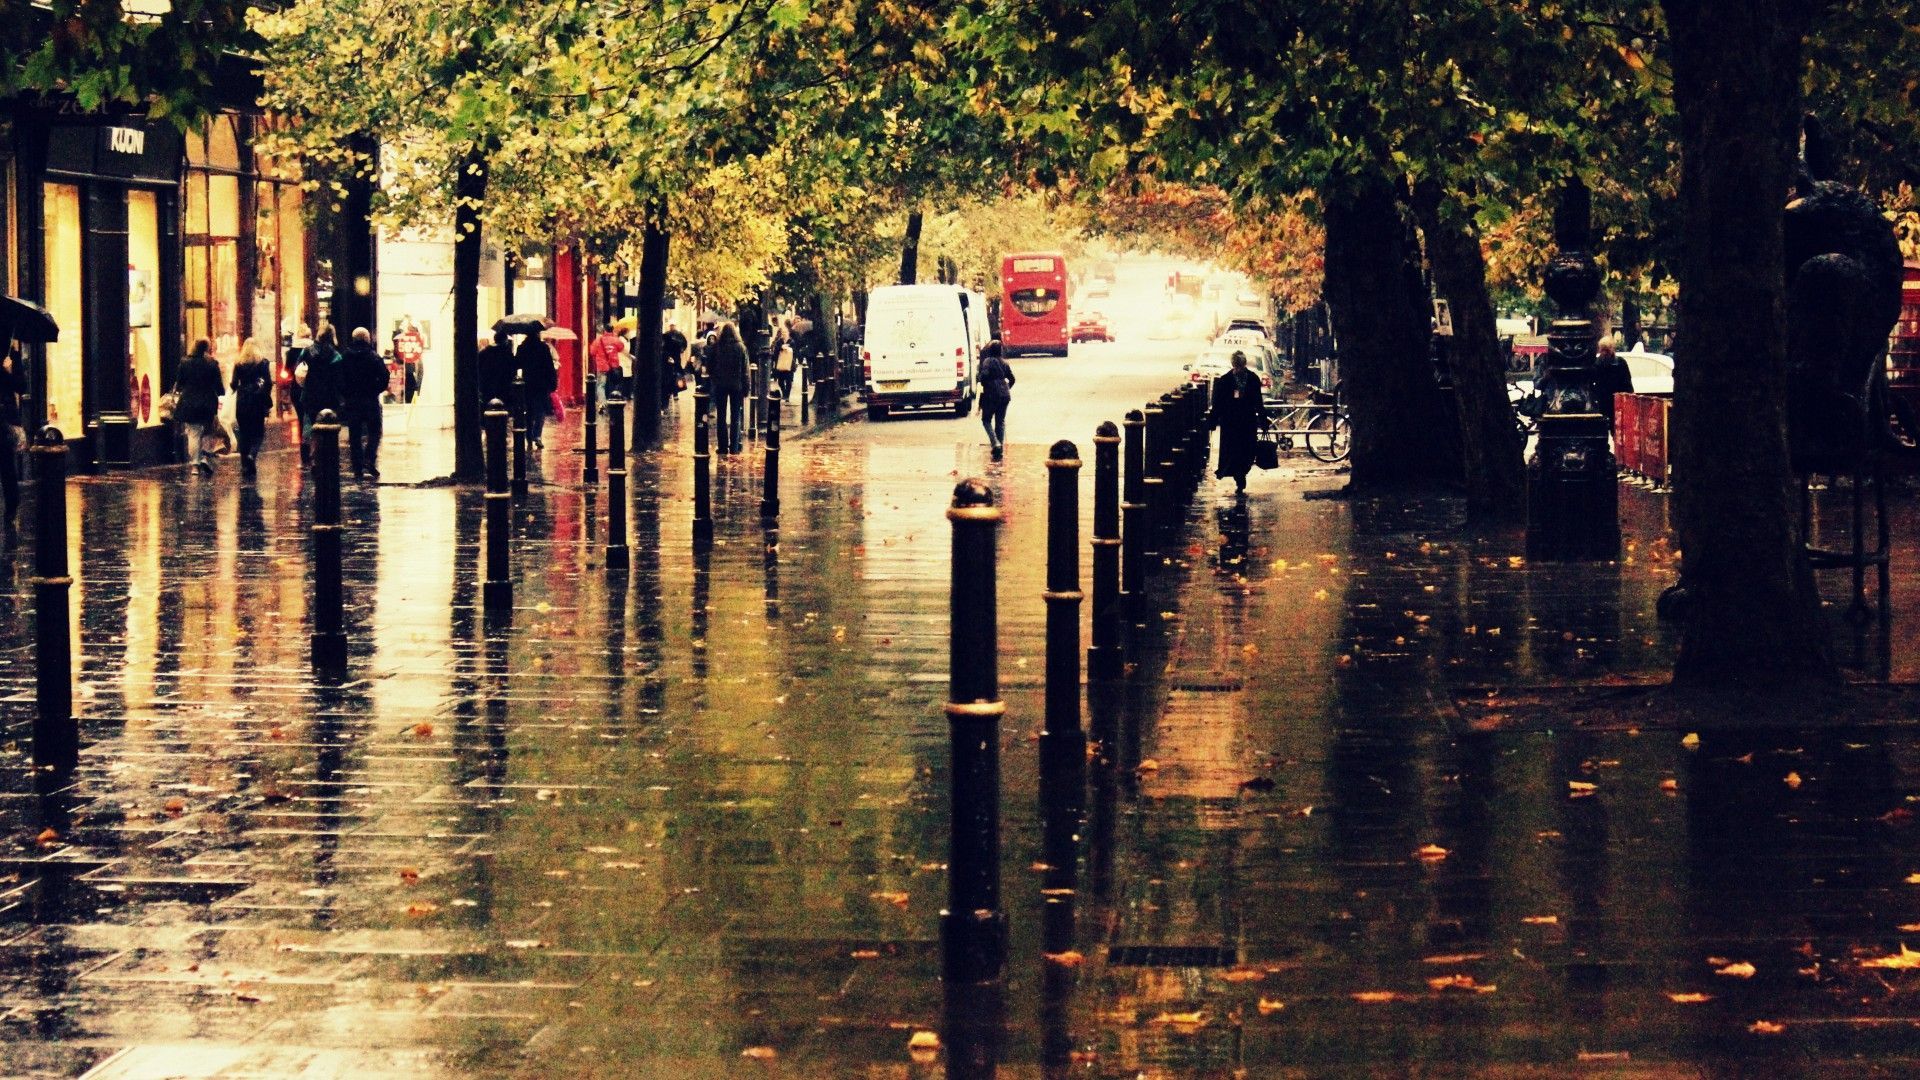 Download wallpaper autumn, city, street, rain, city resolution 1920x1080. City wallpaper, Rain wallpaper, City tree